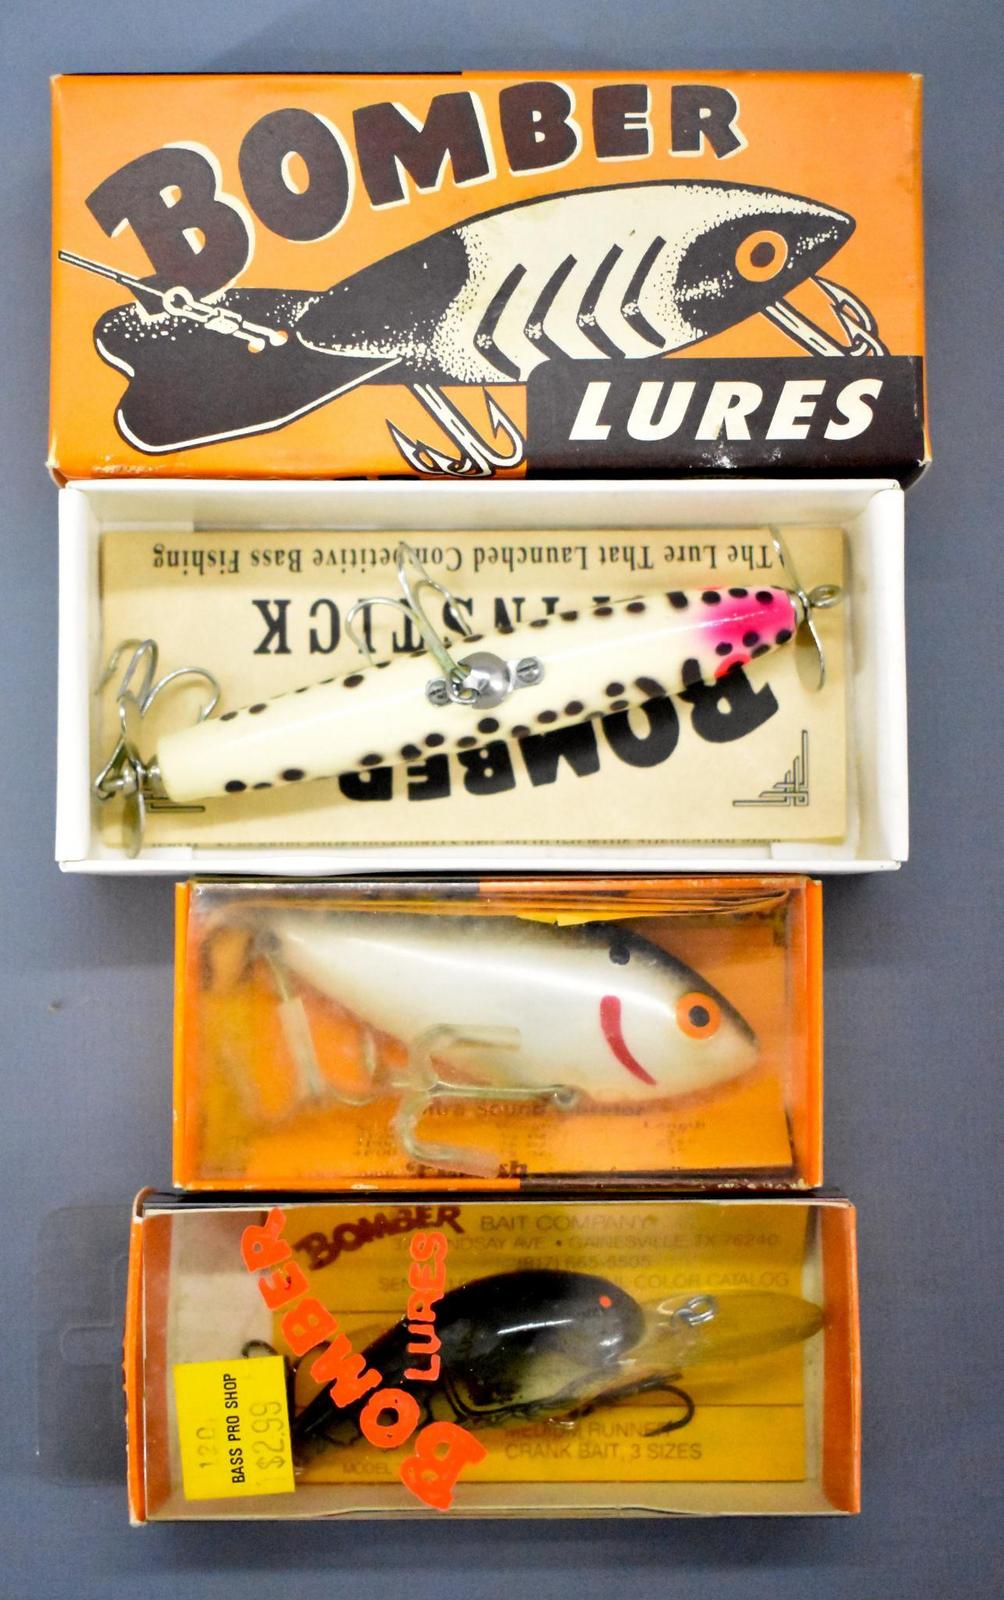 Lot - (6) Vintage Bomber Fishing Lures W/ Original Boxes